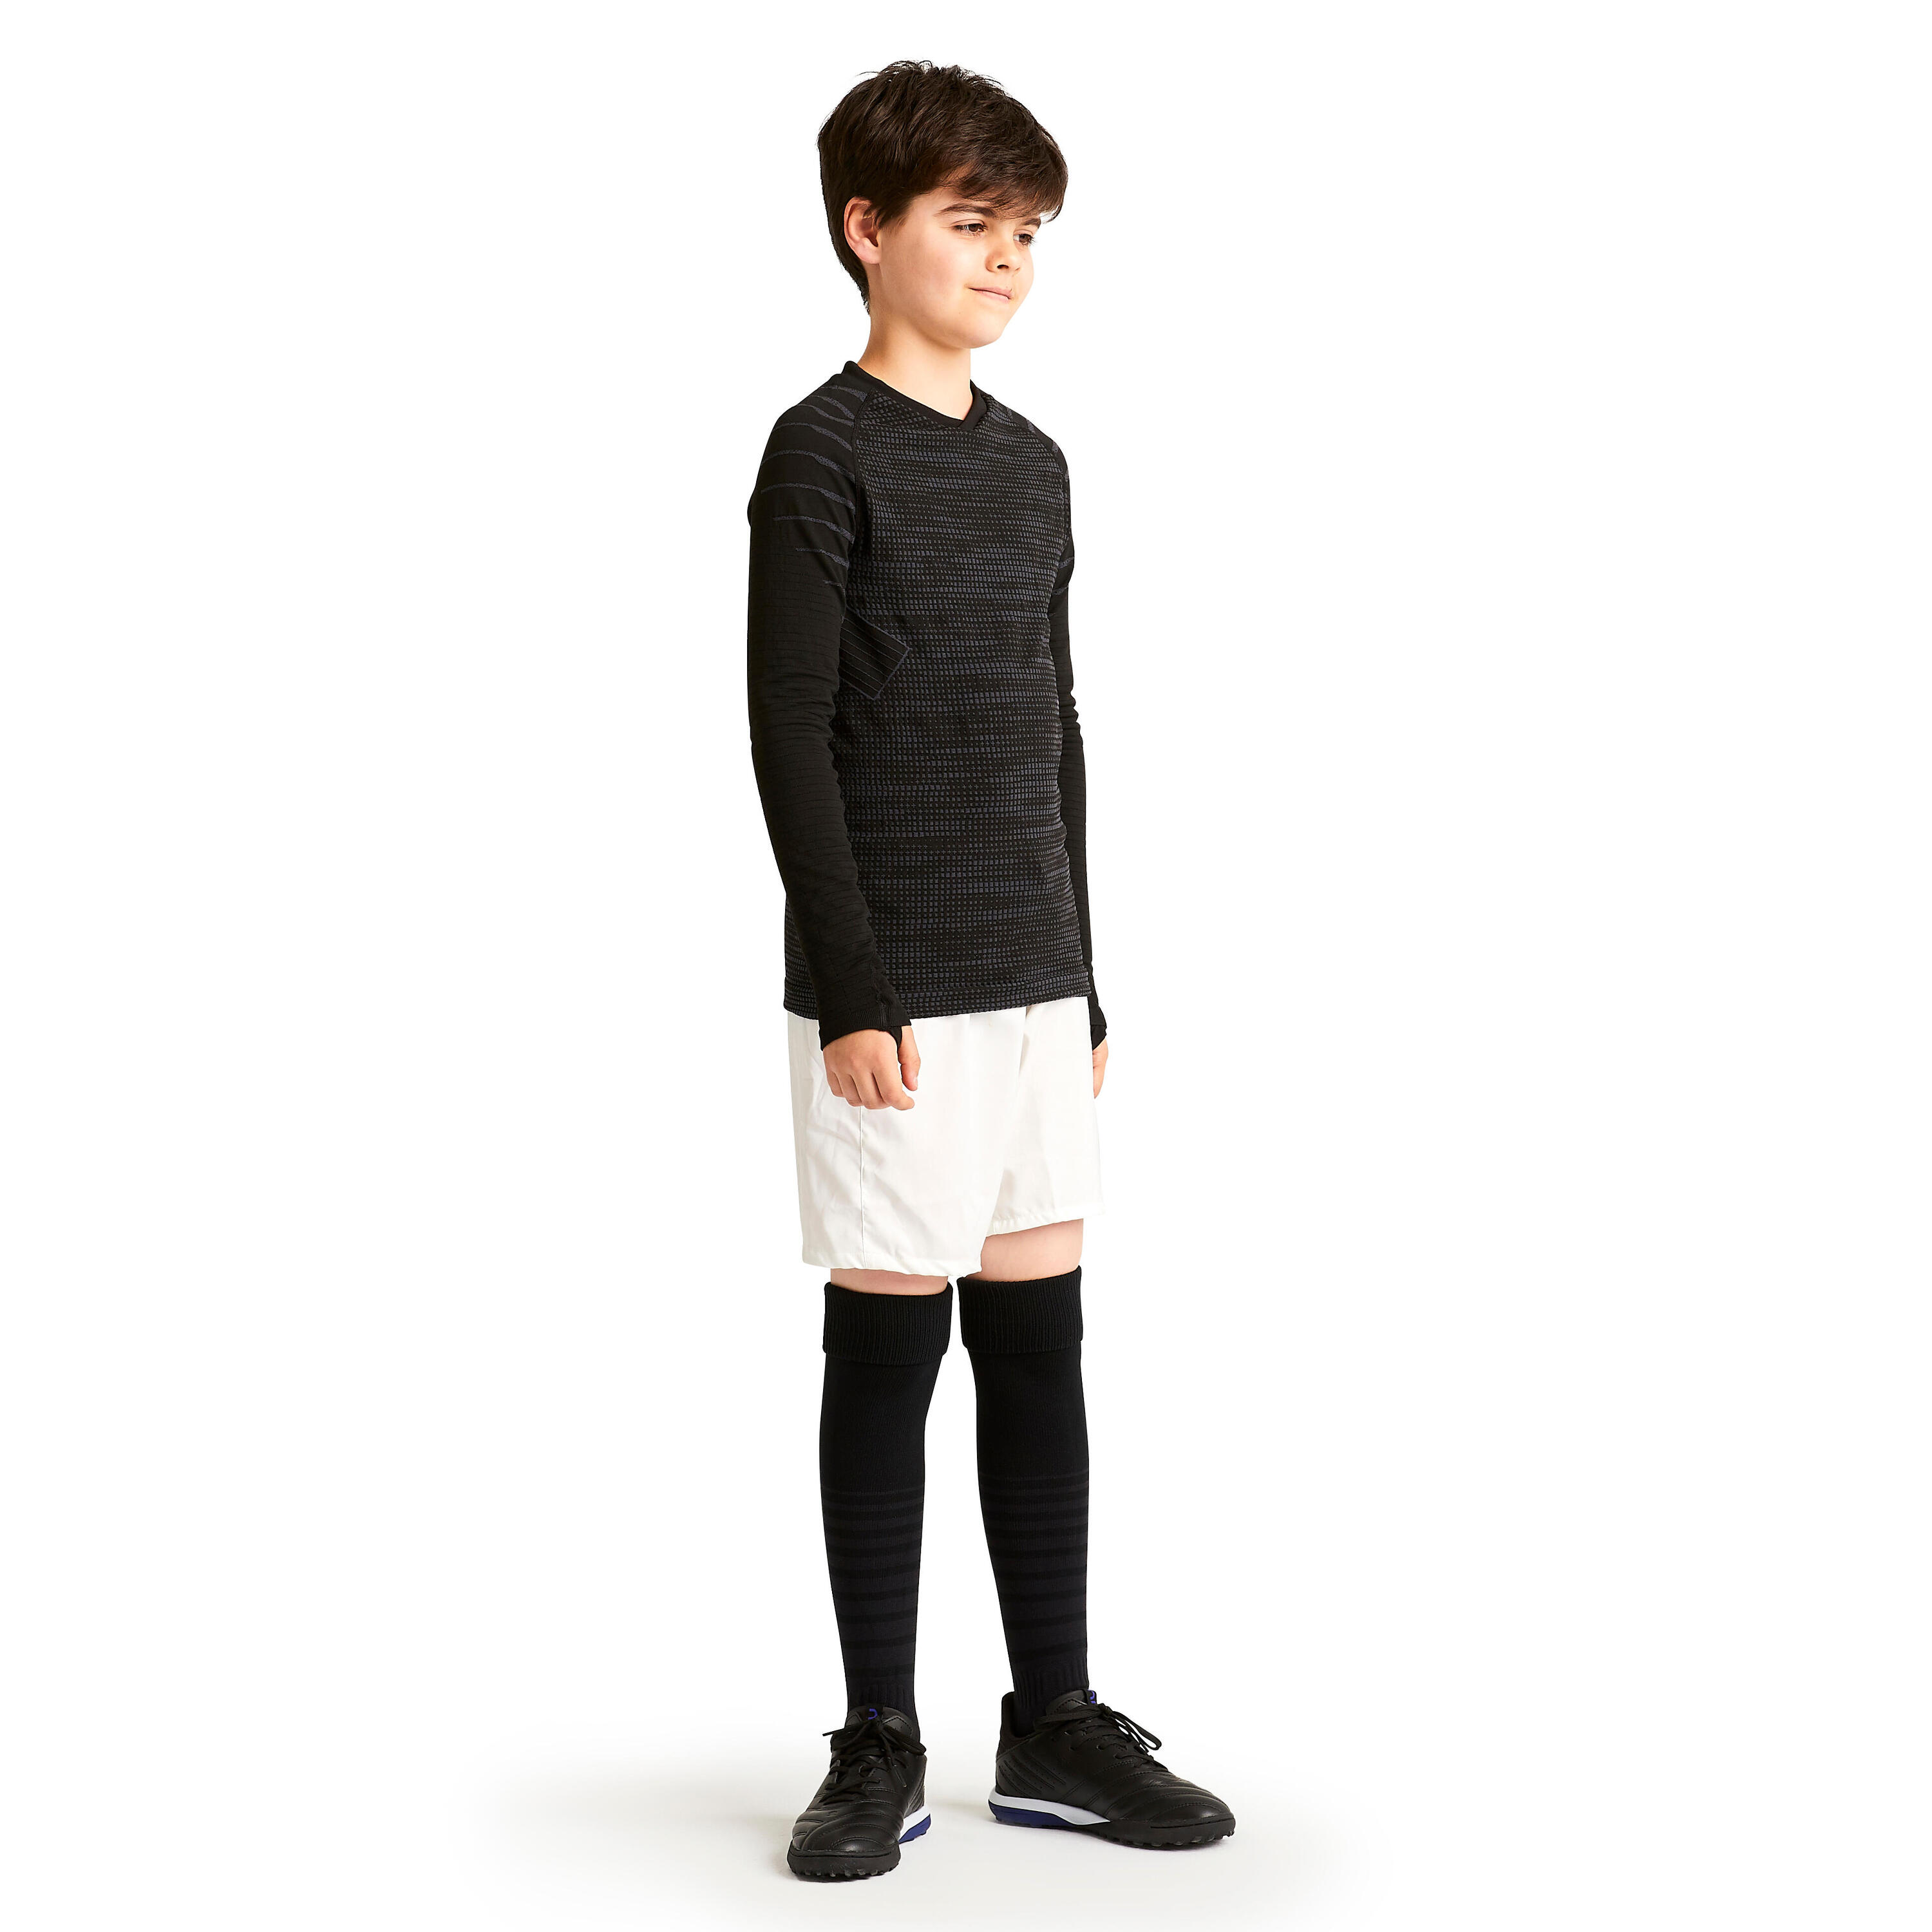 Kids' Long-Sleeved Thermal Base Layer Top Keepdry 500 - Black 6/10